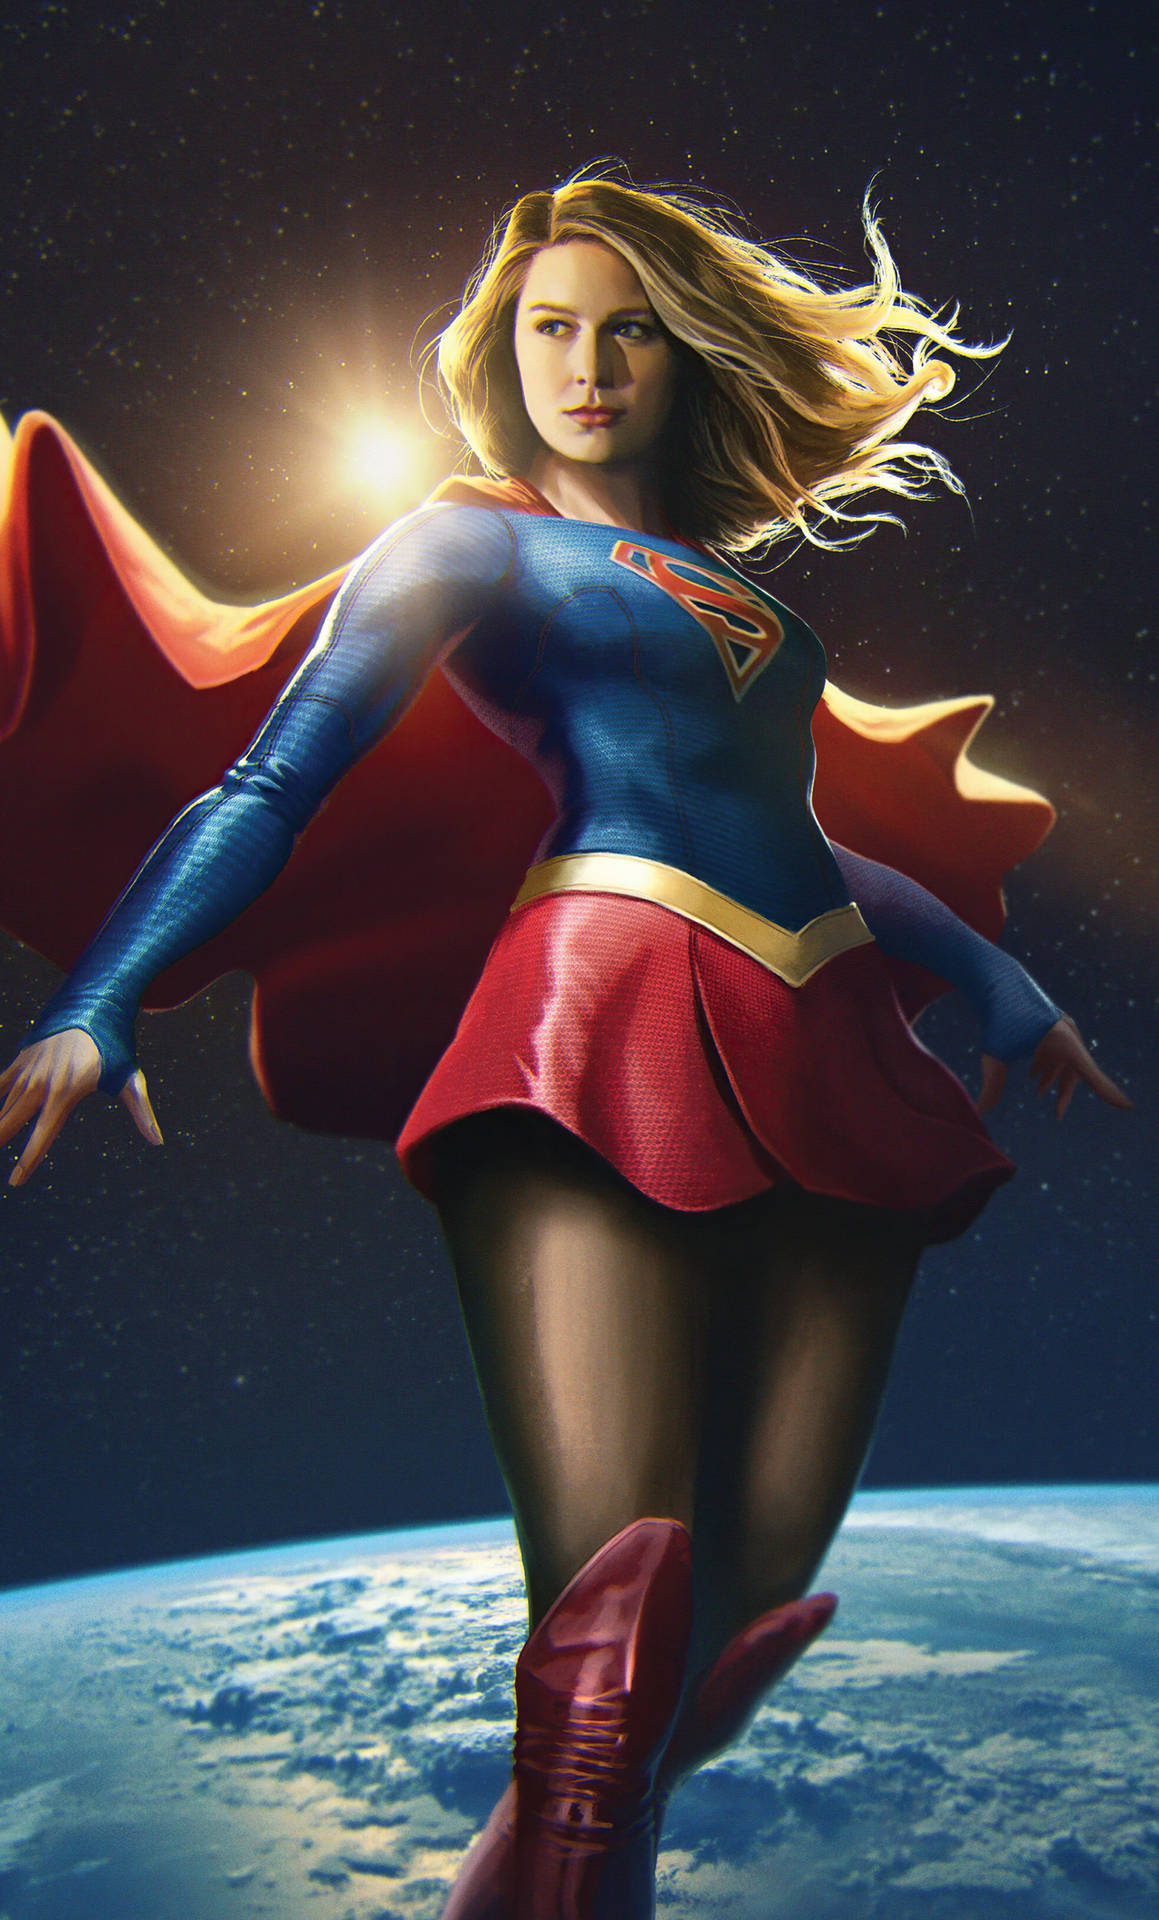 Supergirl In Space Superhero iPhone Wallpaper